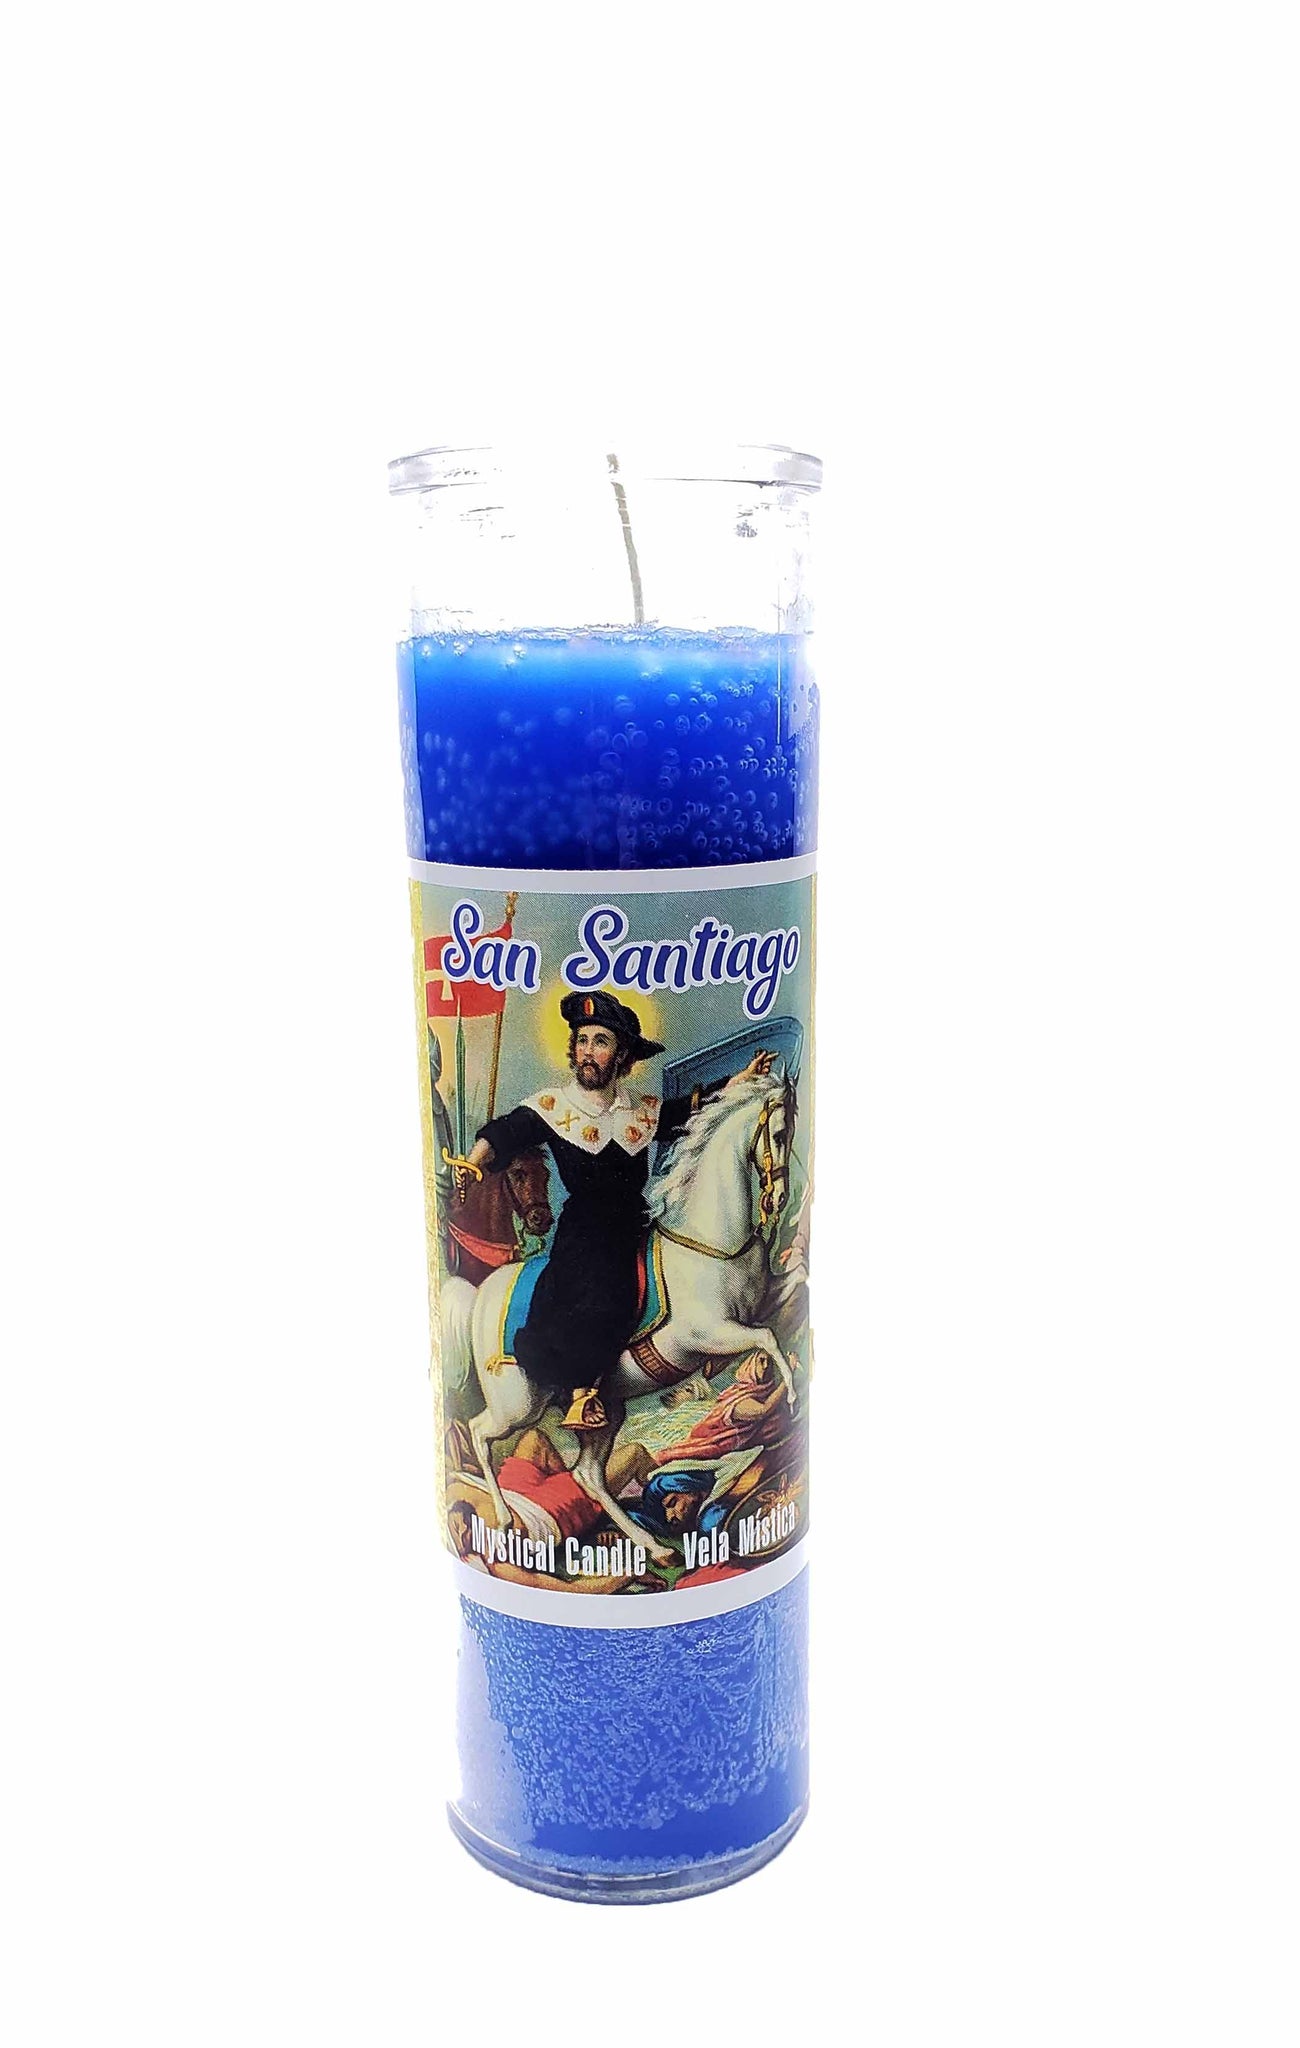 San Santiago Spiritual Candle